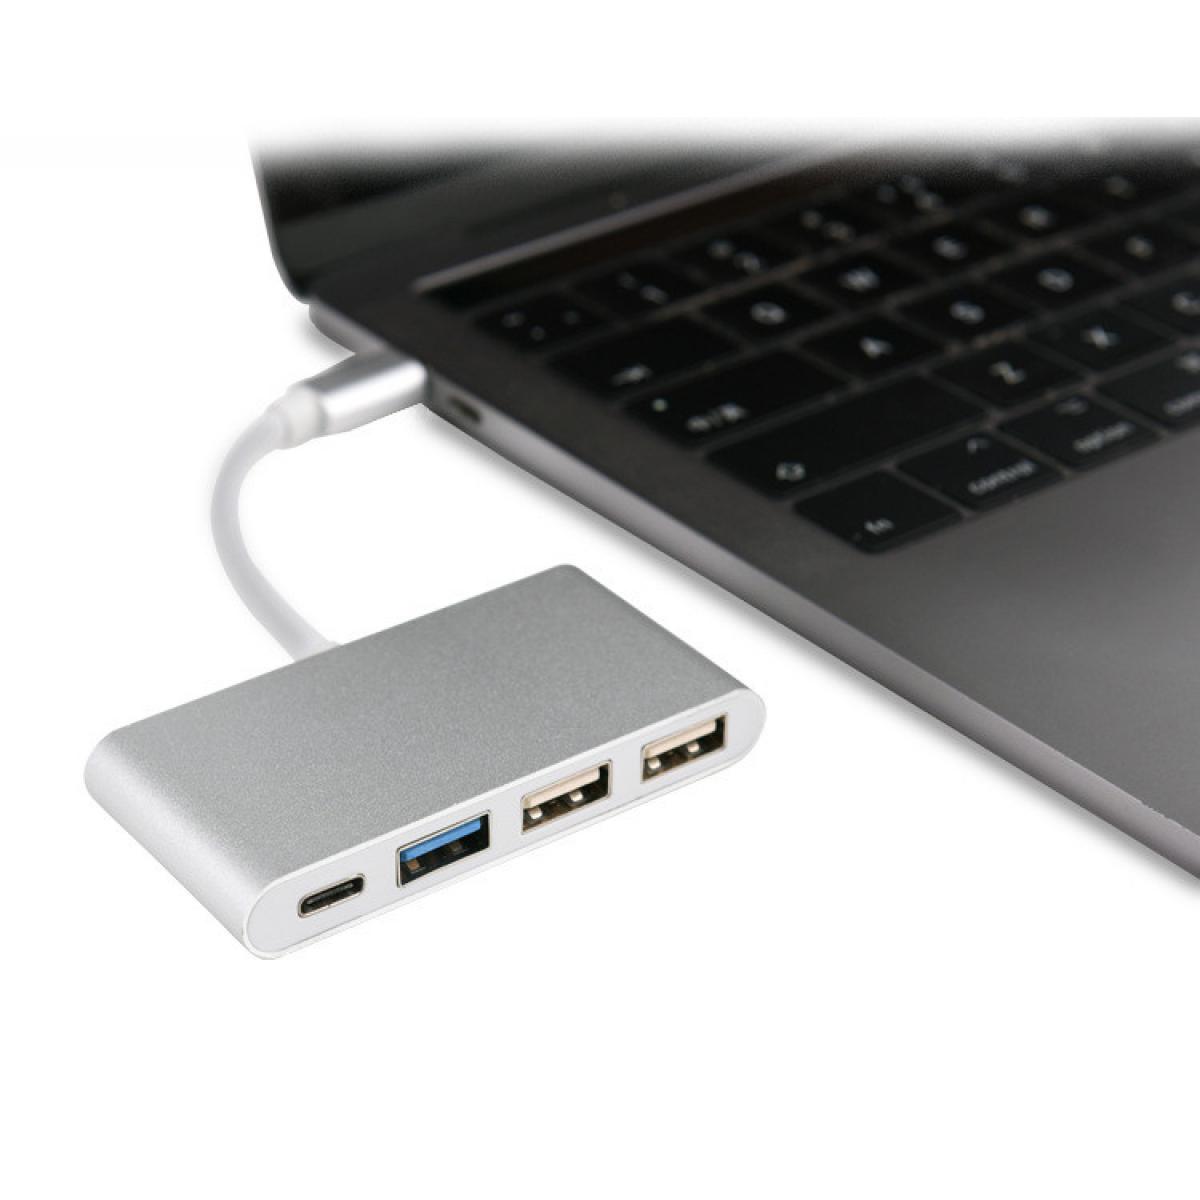 Shot - Multi Adaptateur 4 en 1 Type C pour MAC APPLE Smartphone Hub 2 ports USB 2.0 1 Port USB 3.0 (ARGENT) - Hub